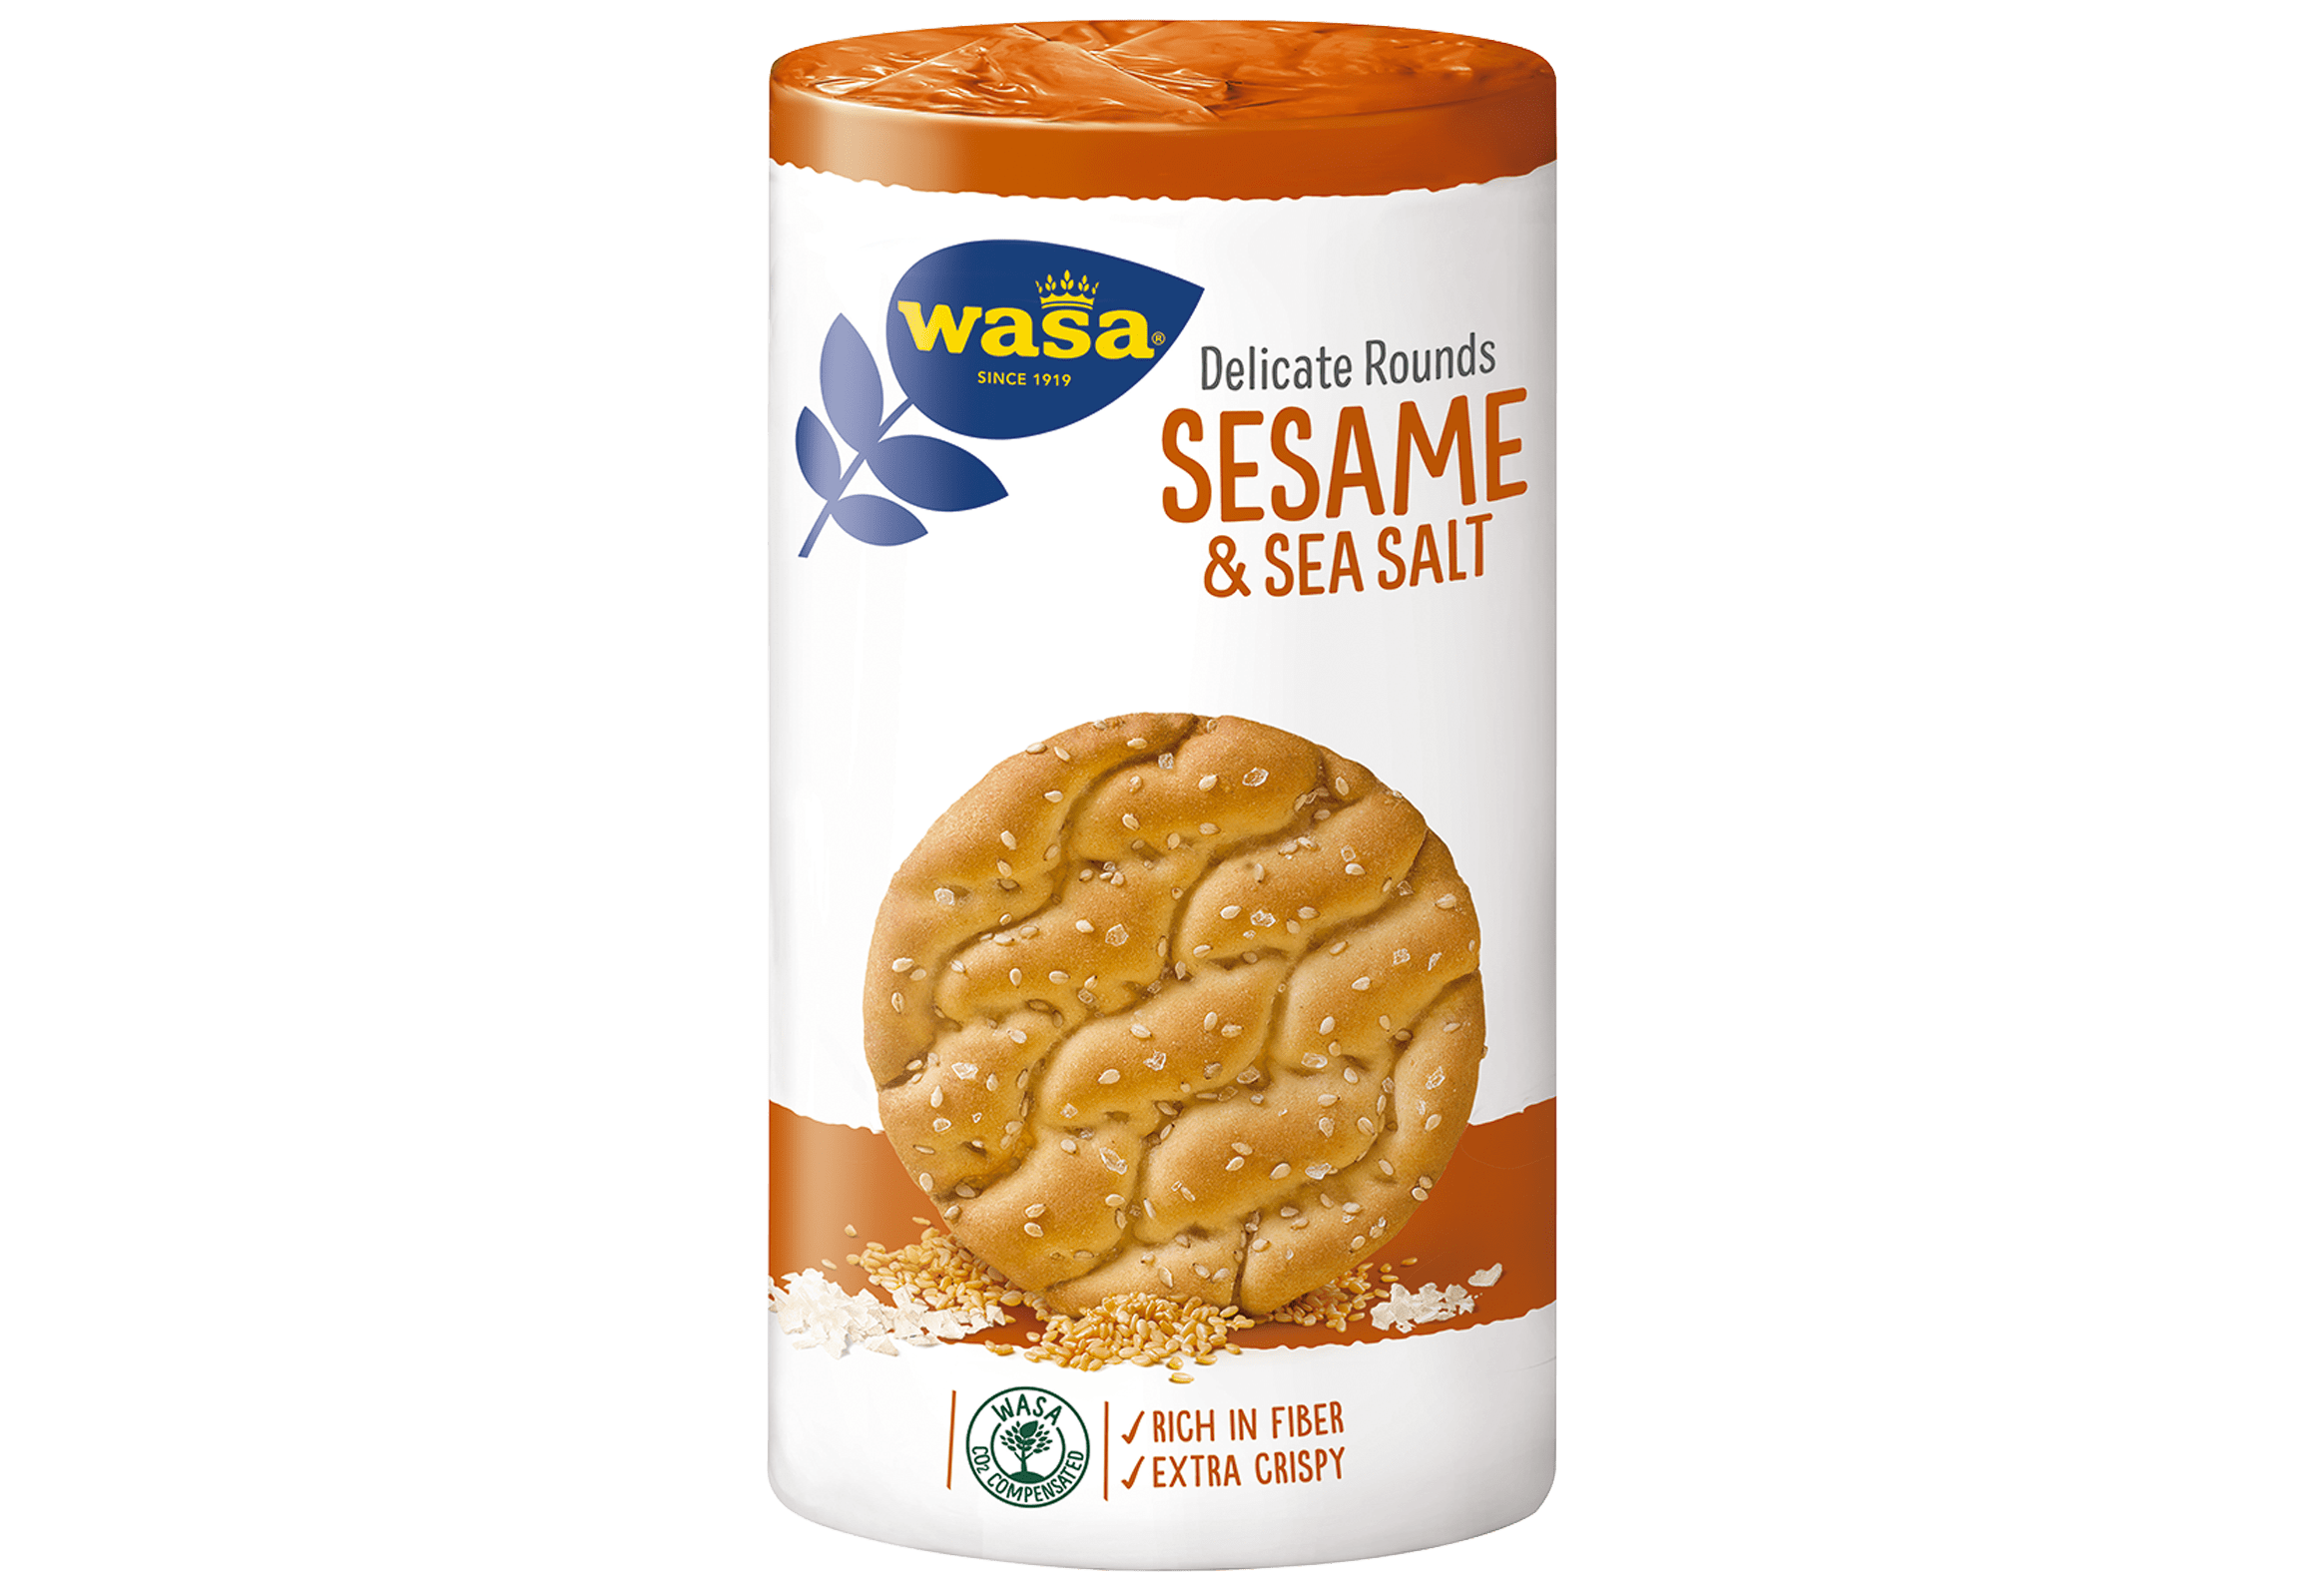 Delicate Rounds Sesame & Sea Salt